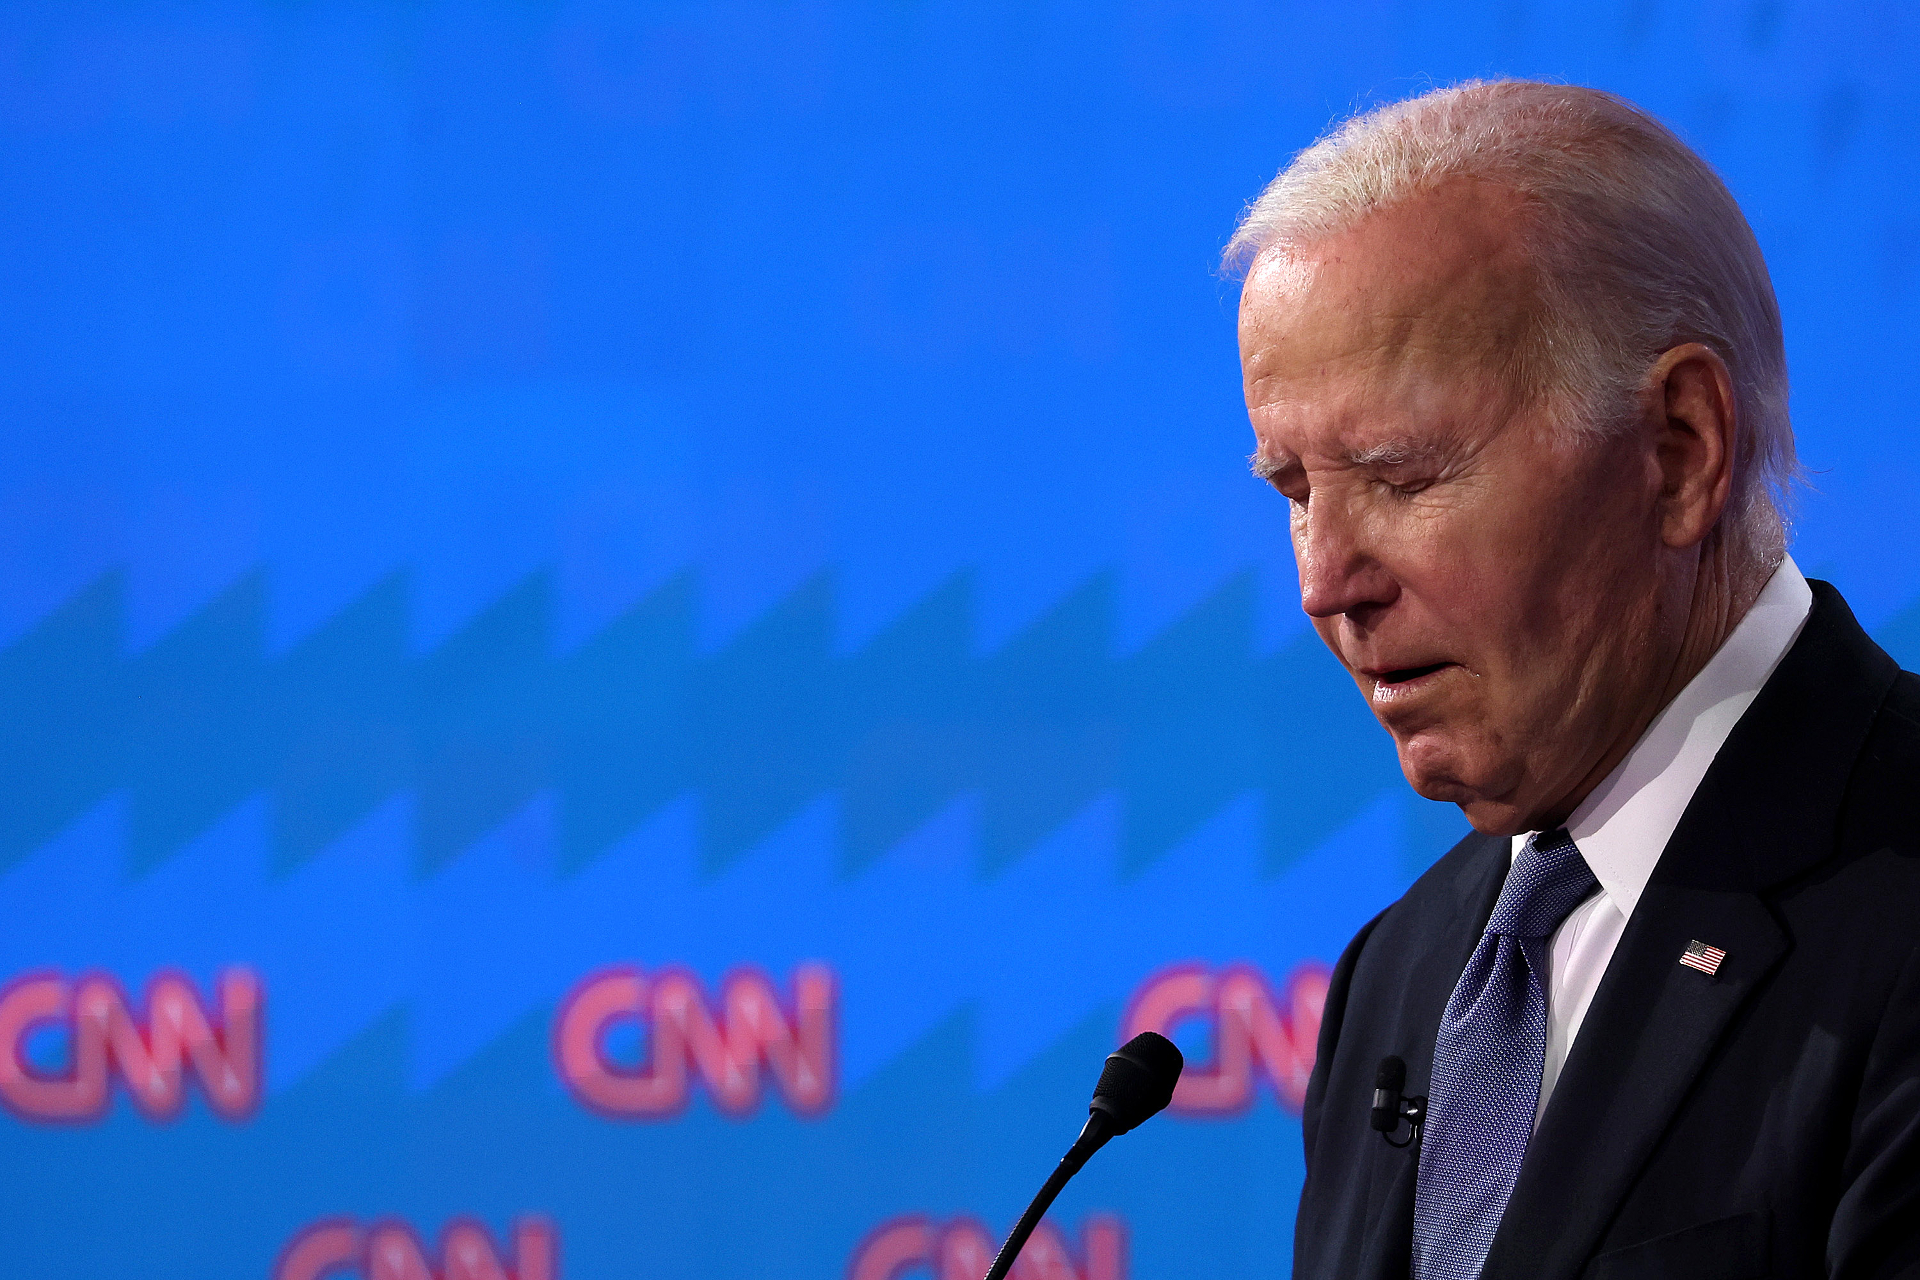 Biden’s showing during the debate 